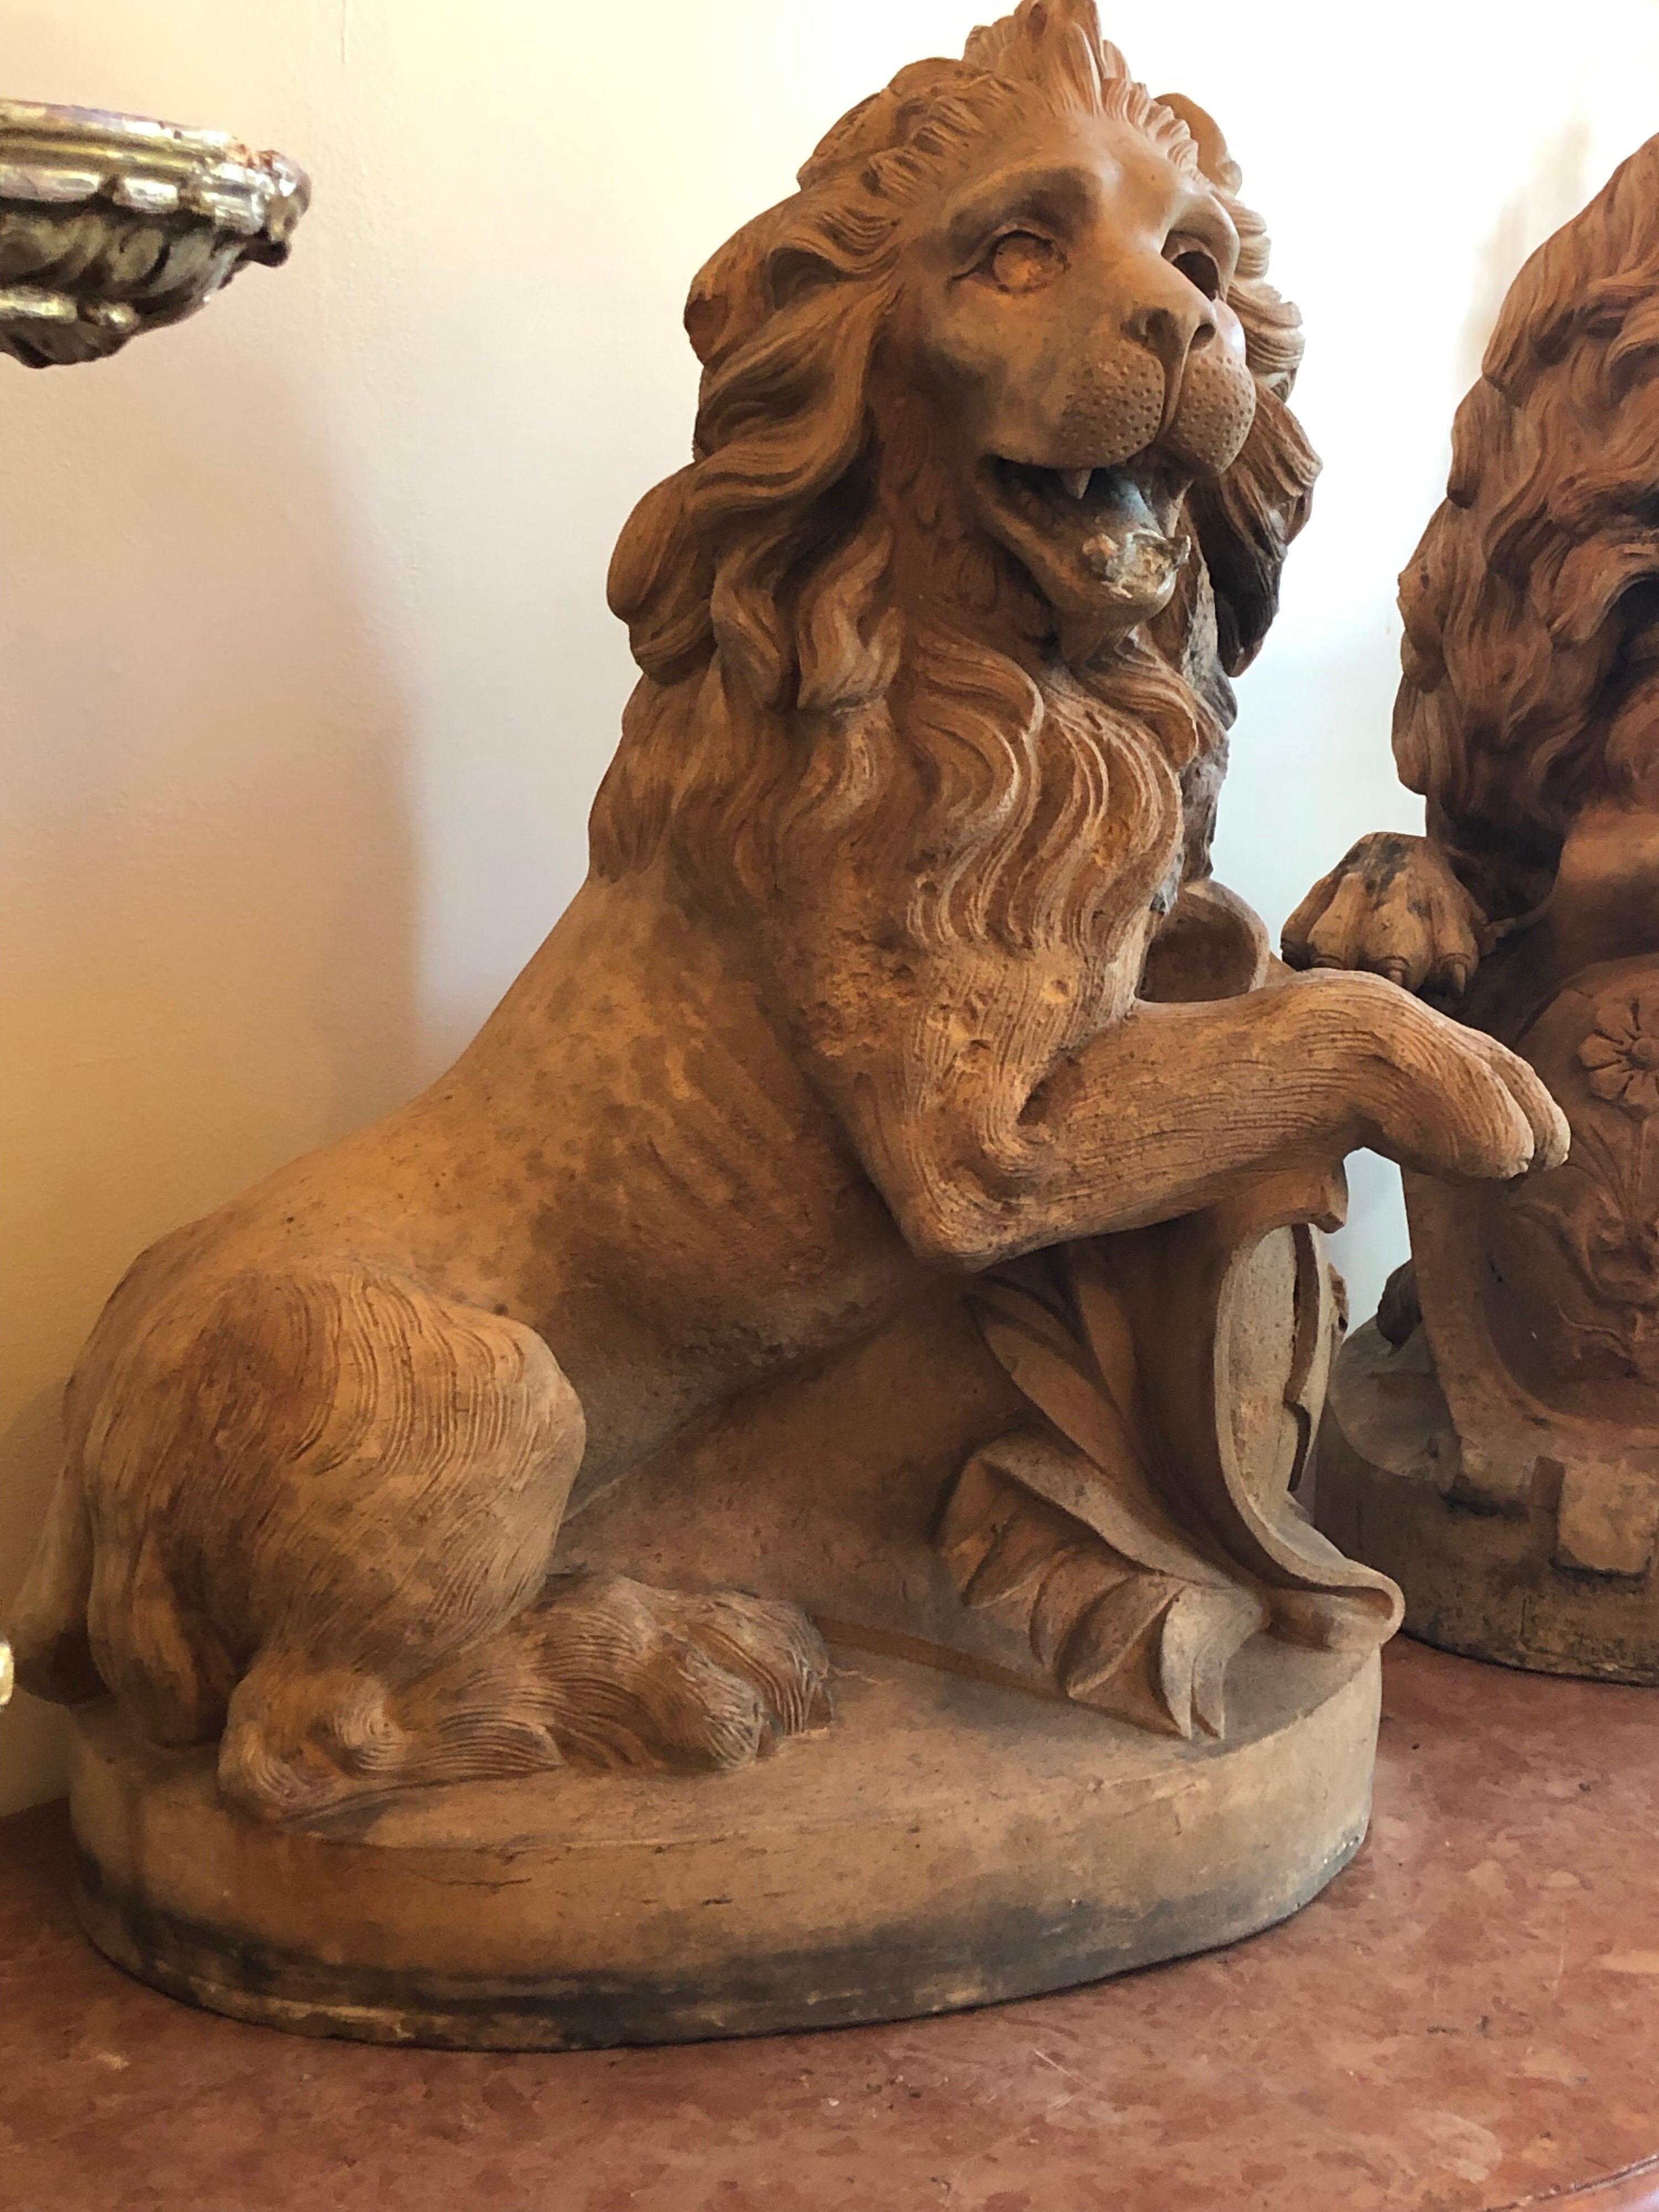 Pair of 19th century terracotta seated lions with shields. Manufactured by
Mandeville and Combler Fab De Produite Ceramique
for the Chateau De Castelnaud.